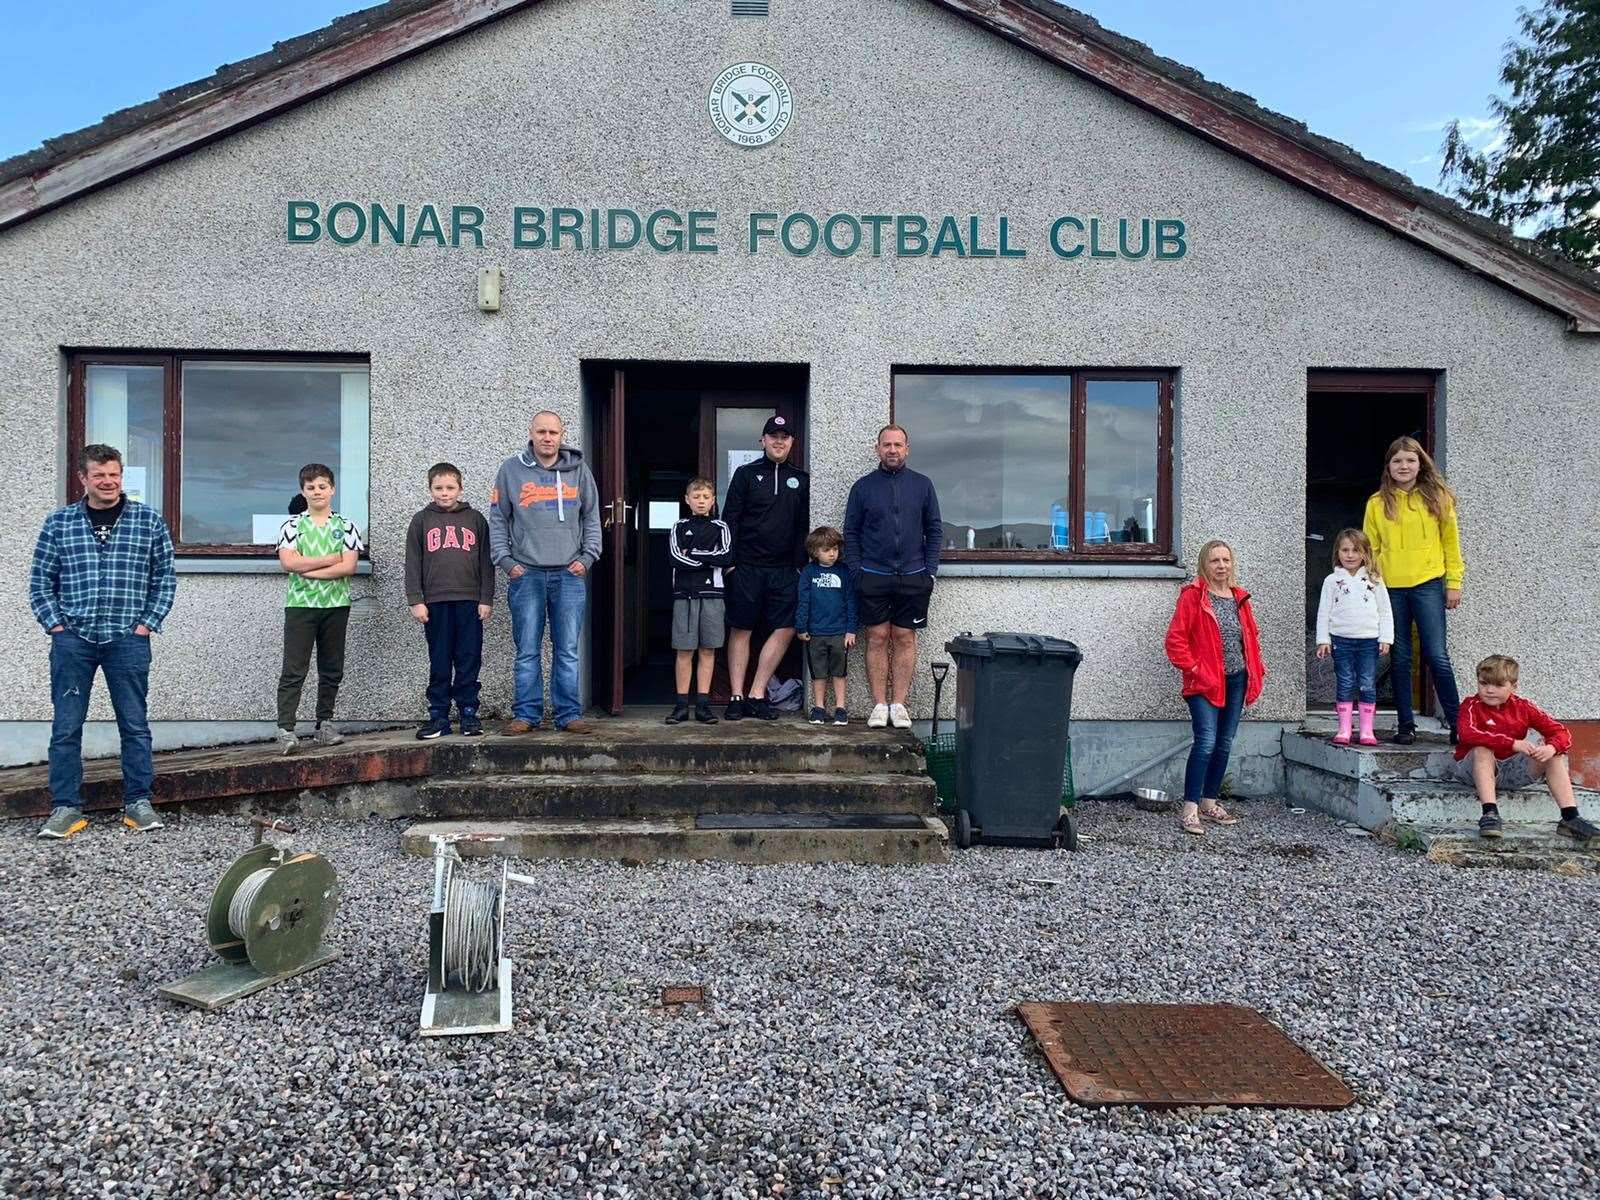 Bonar Bridge Football Club juniors and committee members outside the clubhouse pre-lockdown.